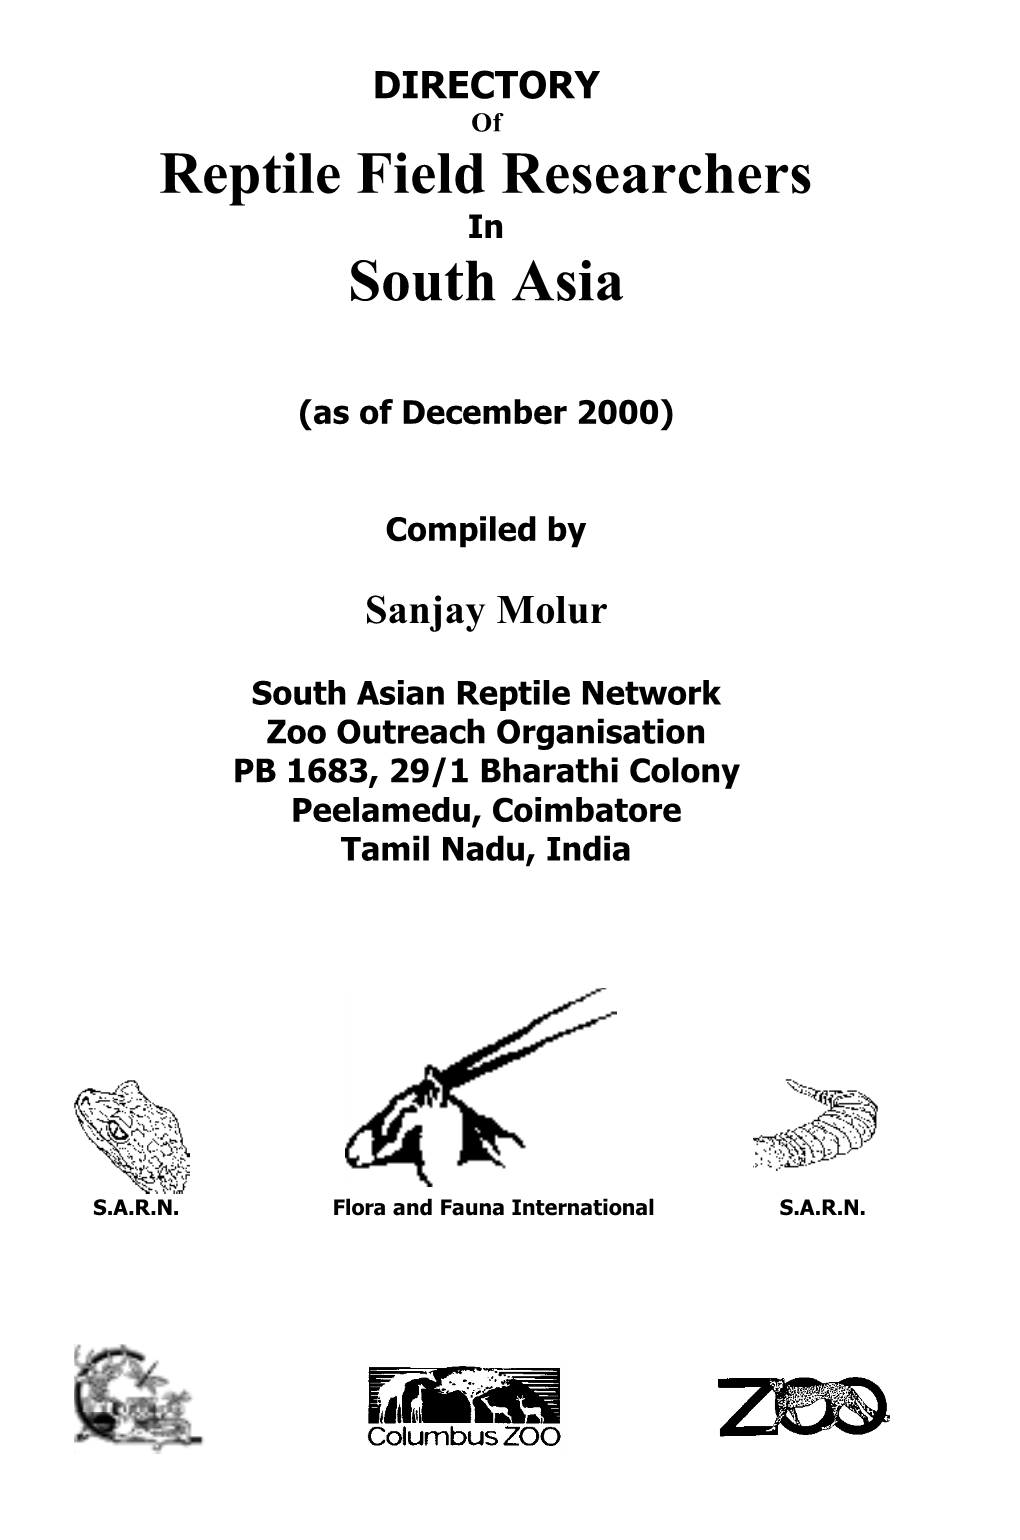 Reptile Field Researchers South Asia